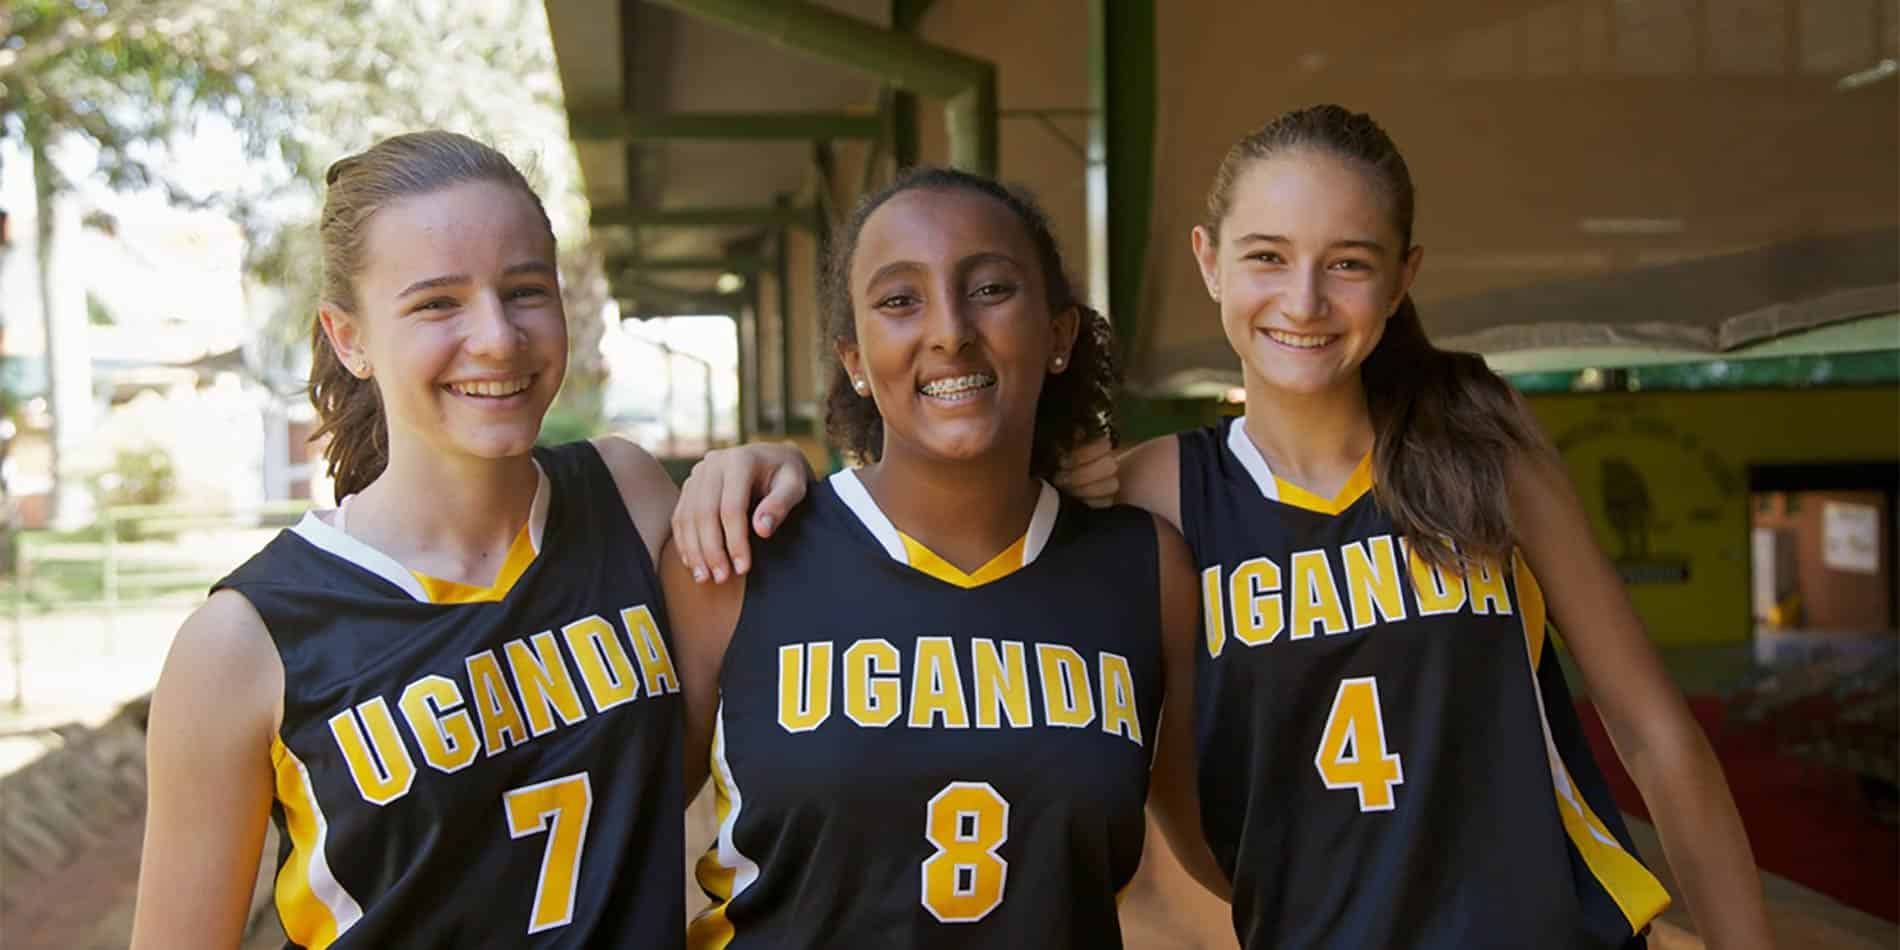  International-School-of-Uganda-001 International School of Uganda International-School-of-Uganda-001 Results